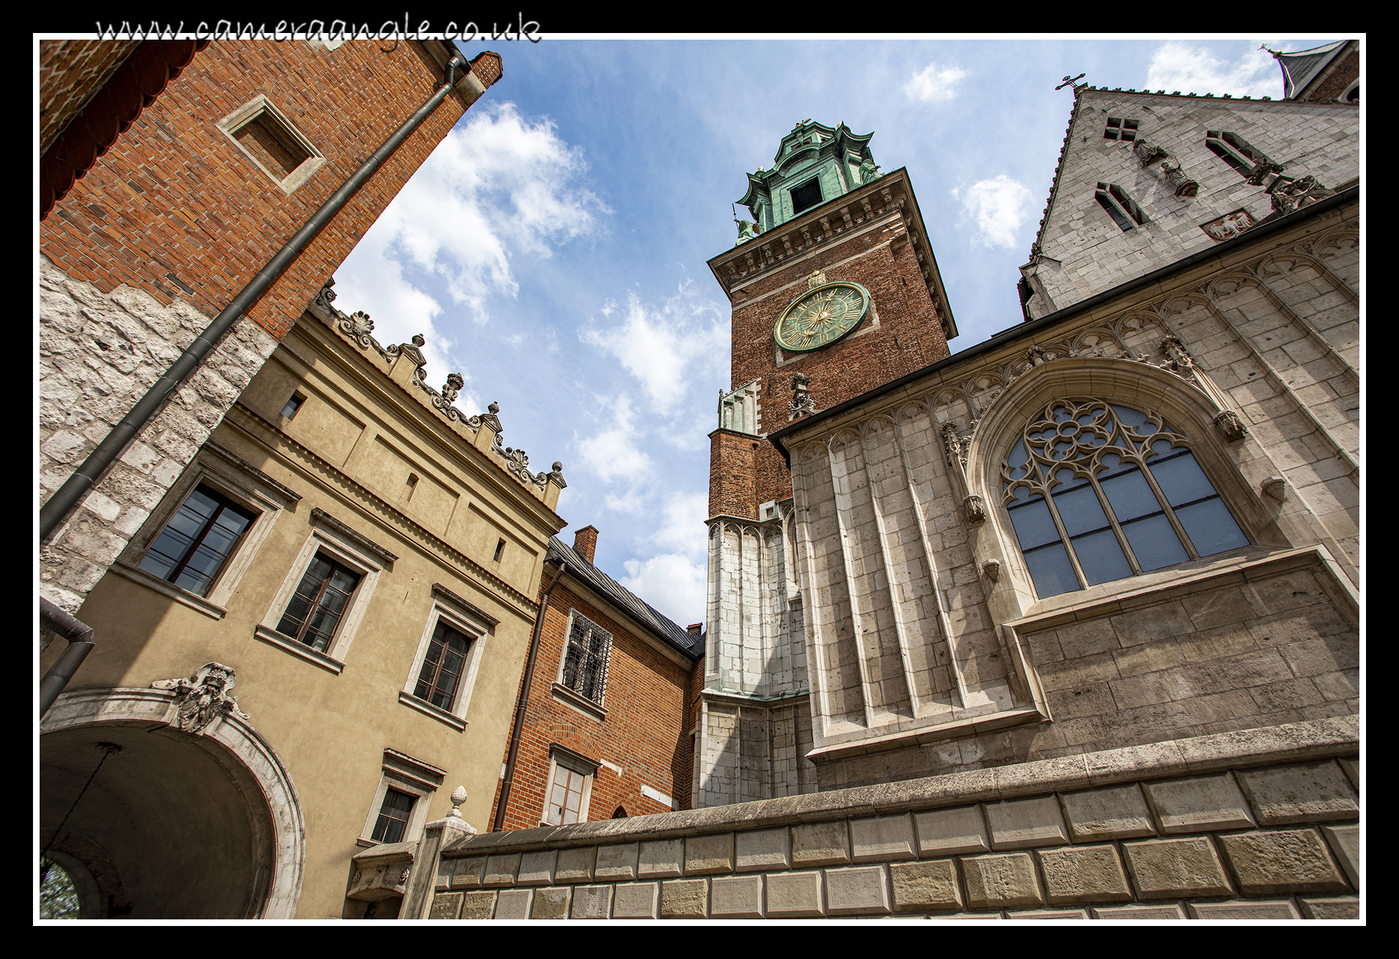 Wawel Cathedral
Keywords: Wawel Cathedral 2019 Krakow